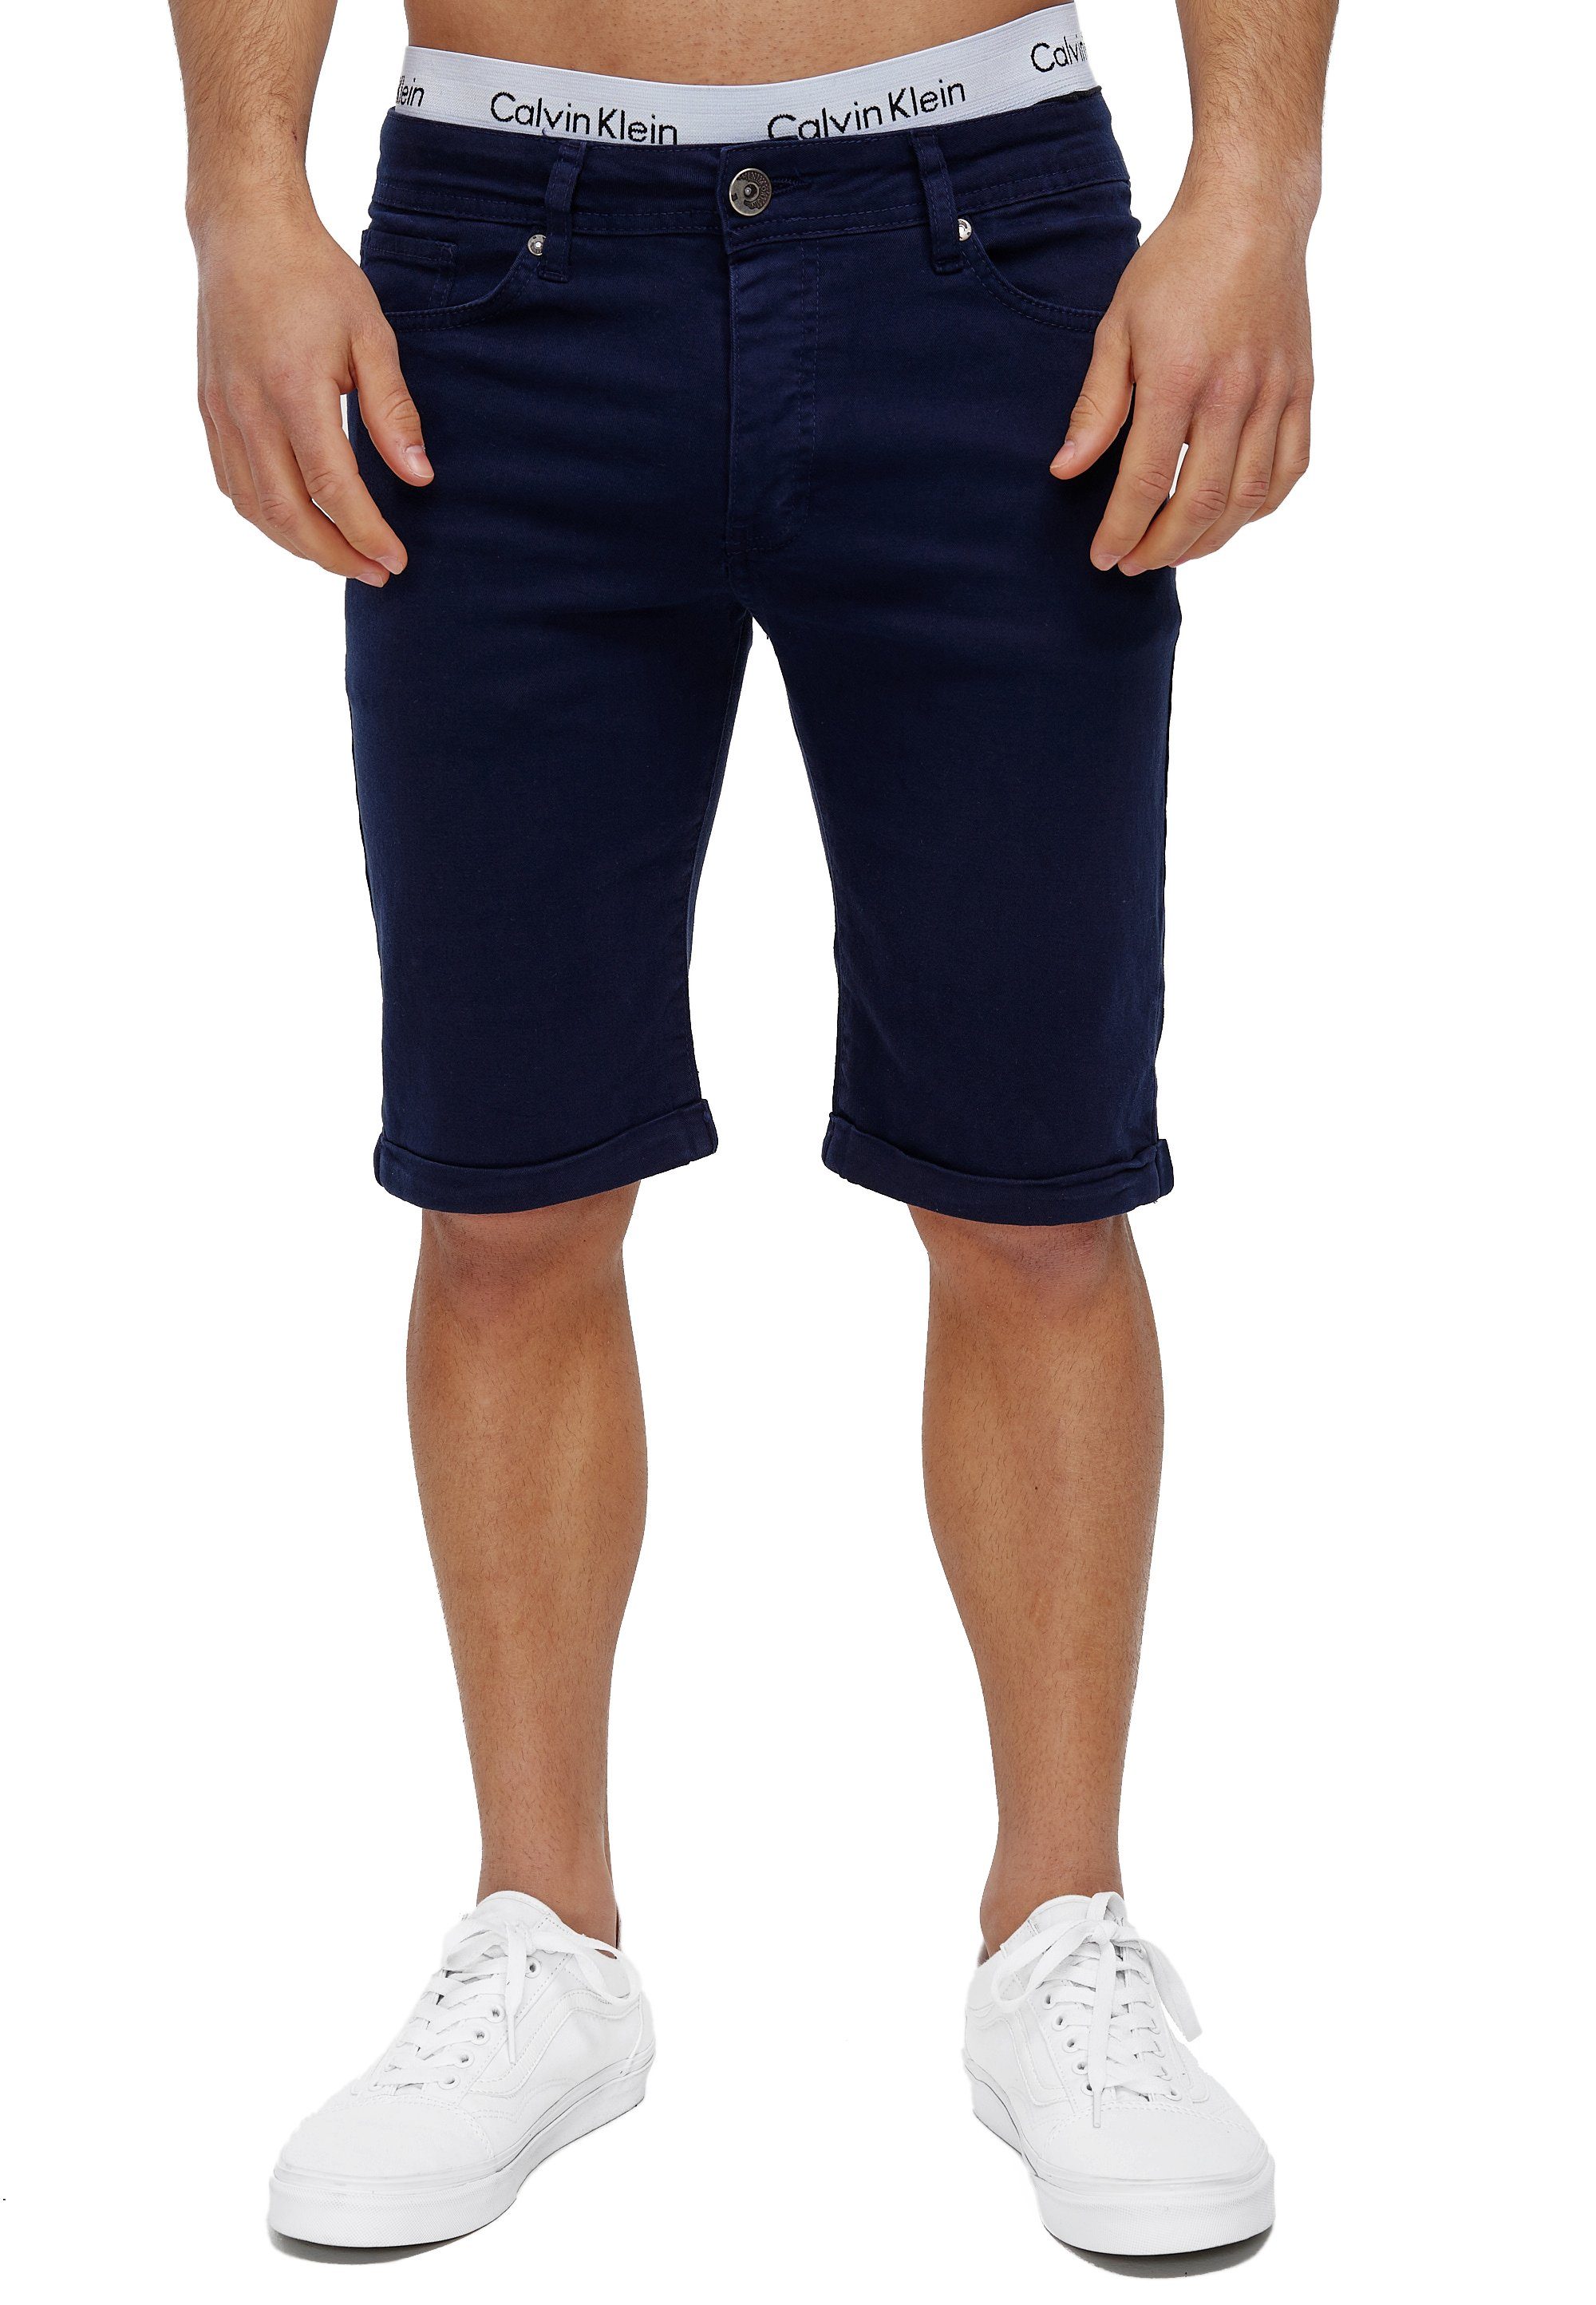 Bermudas OneRedox Sweatpants, Shorts 1-tlg., (Kurze Hose Fitness SH-3422 Navy Casual modischem Freizeit im Design)